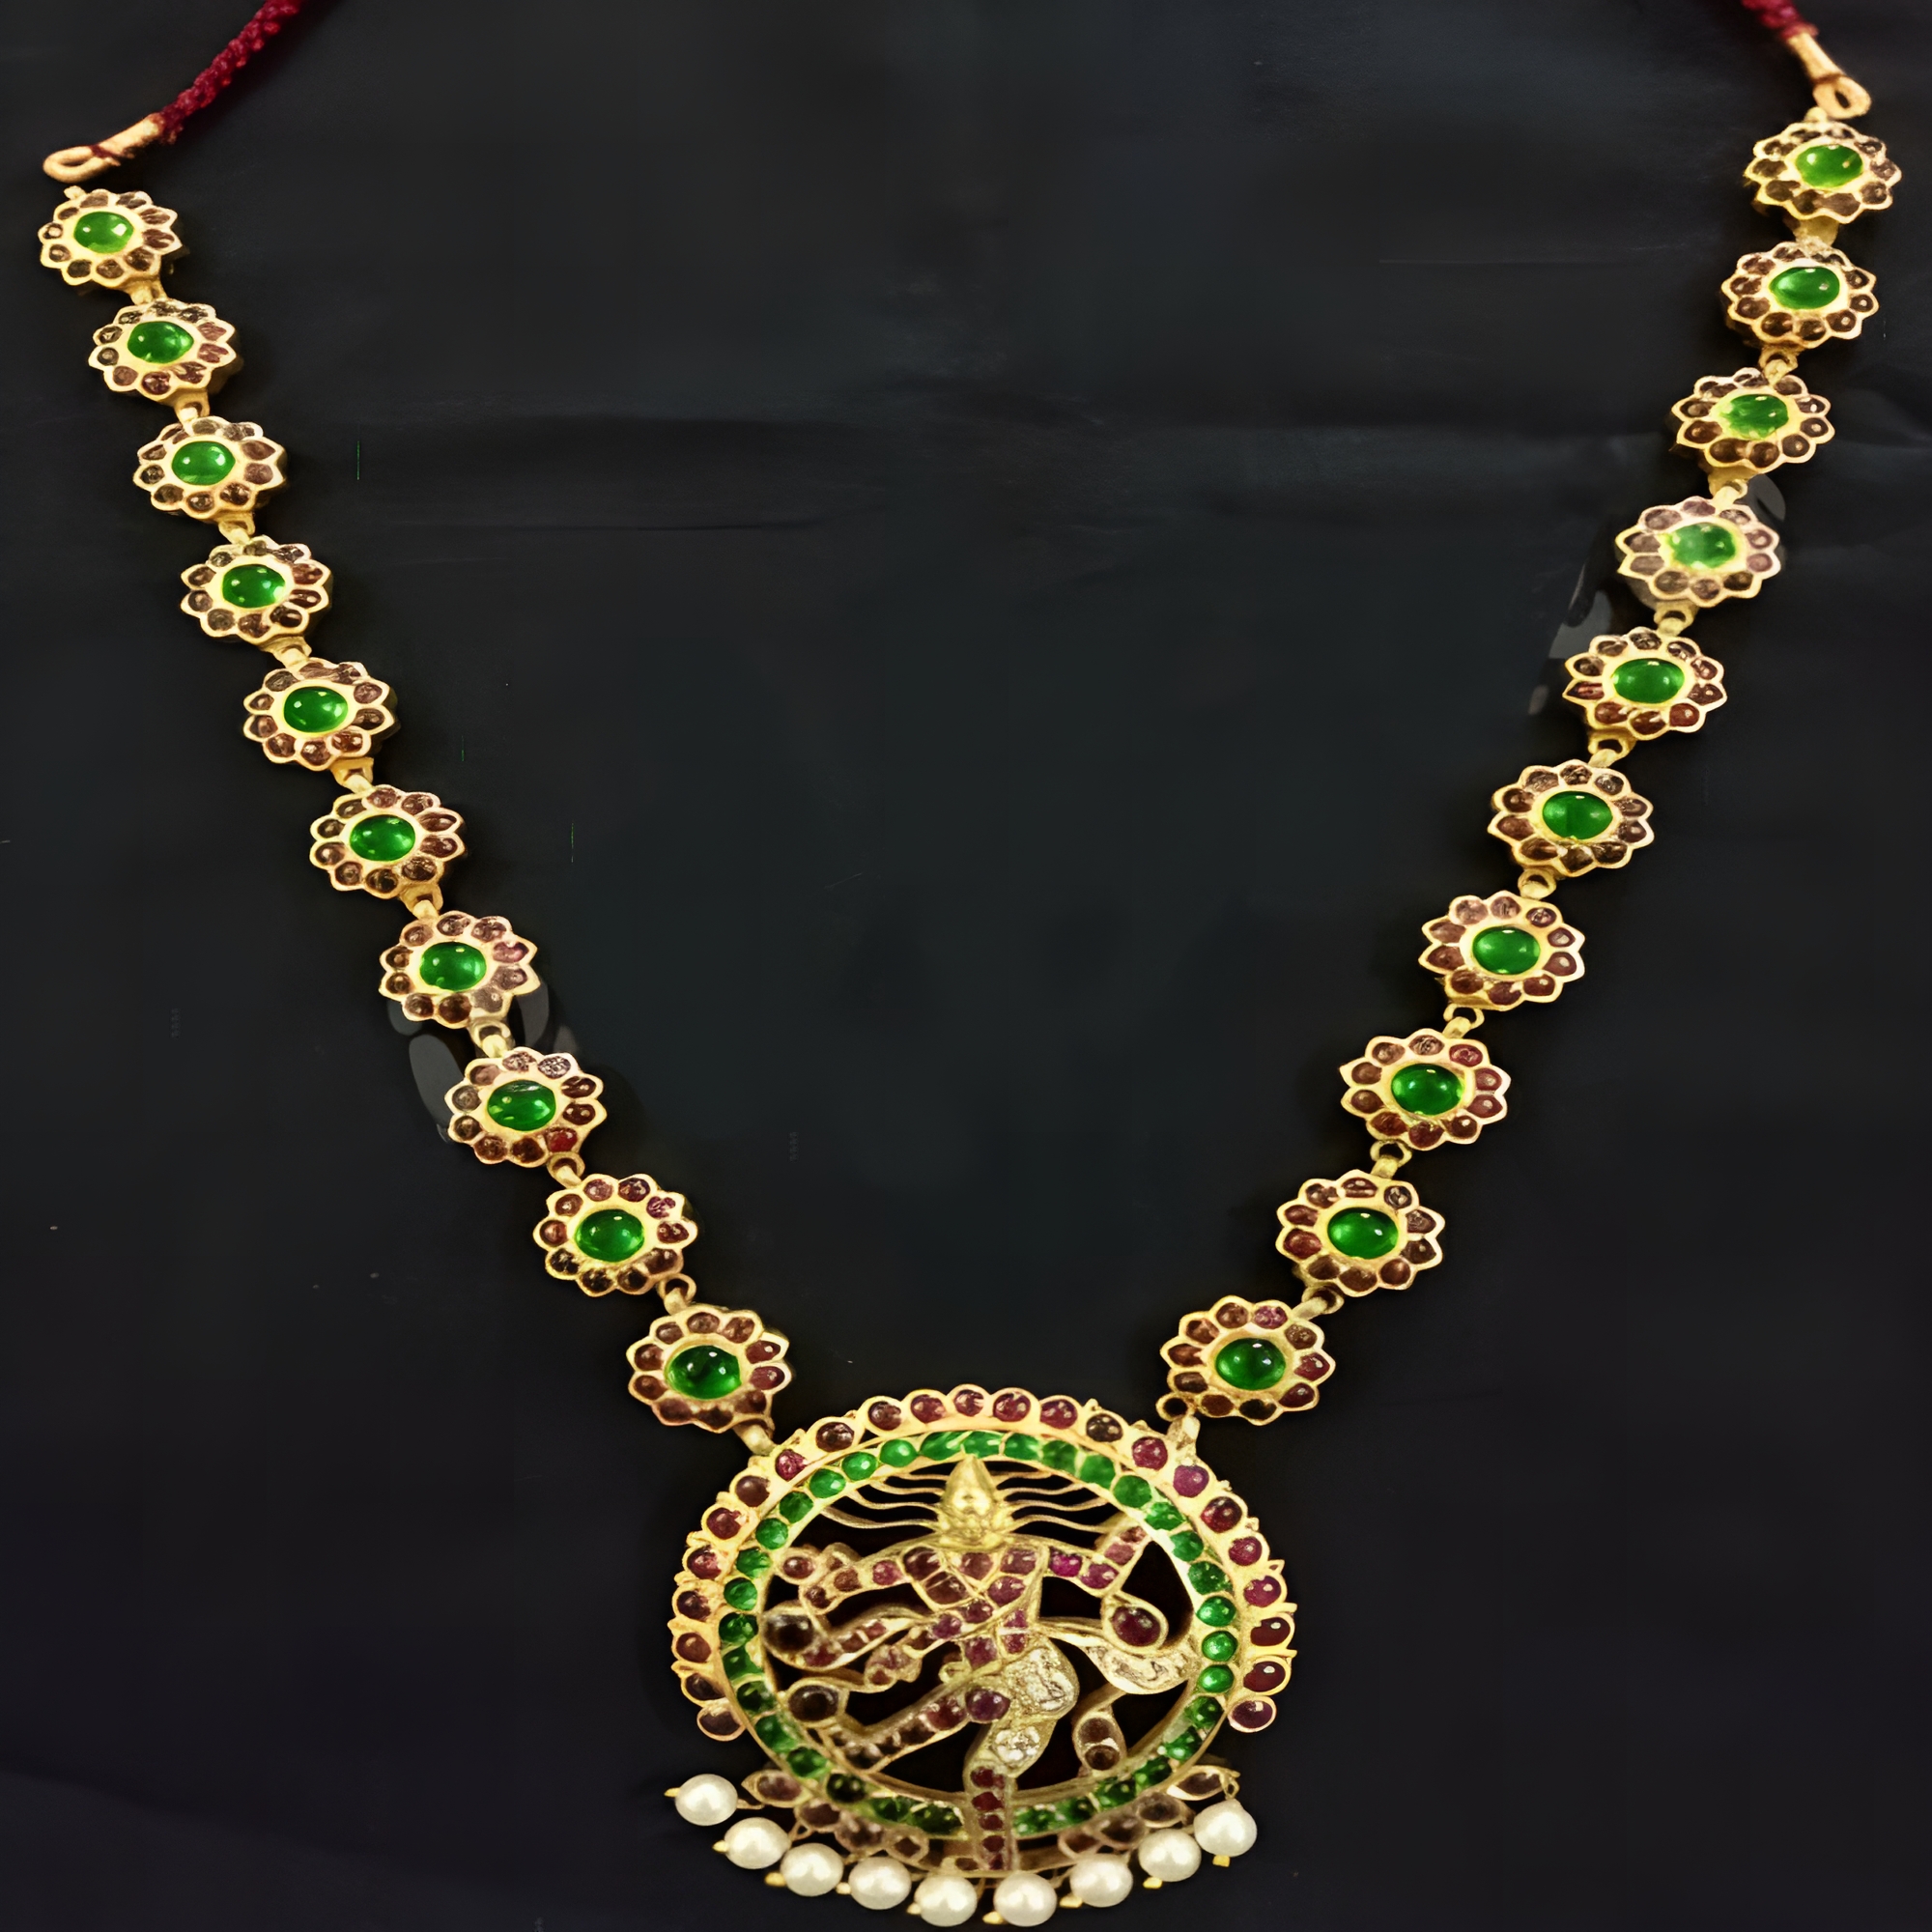 Authentic Nataraja Pendant Long Necklace